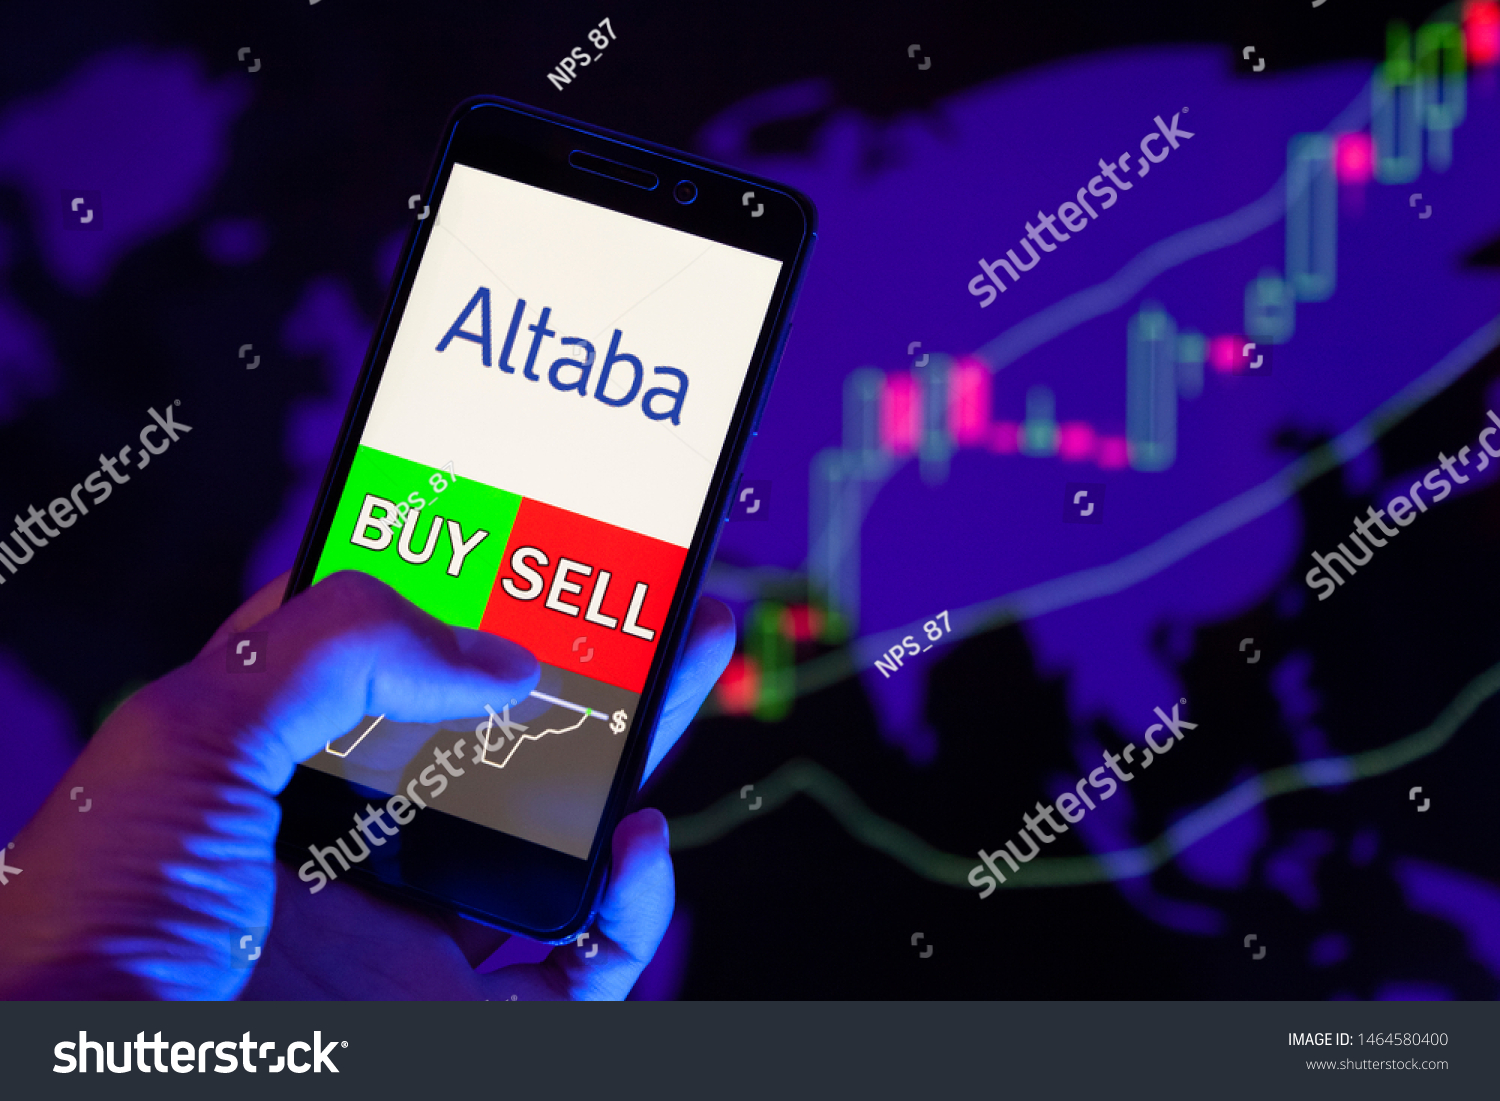 Aaba Stock Chart